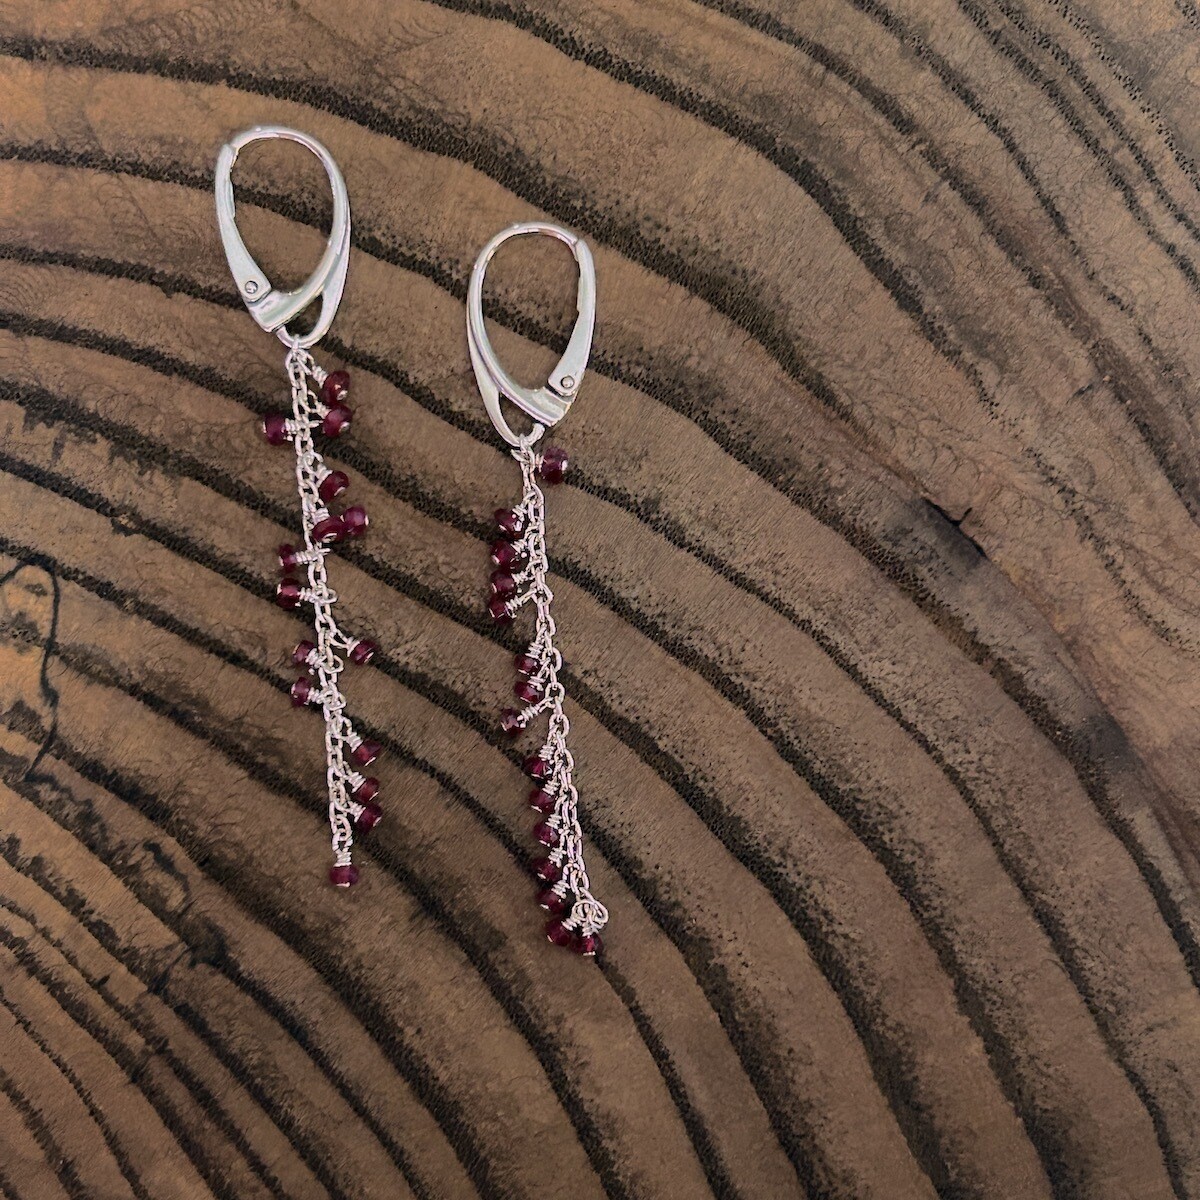 Handmade Silver Earrings with ruby dangle